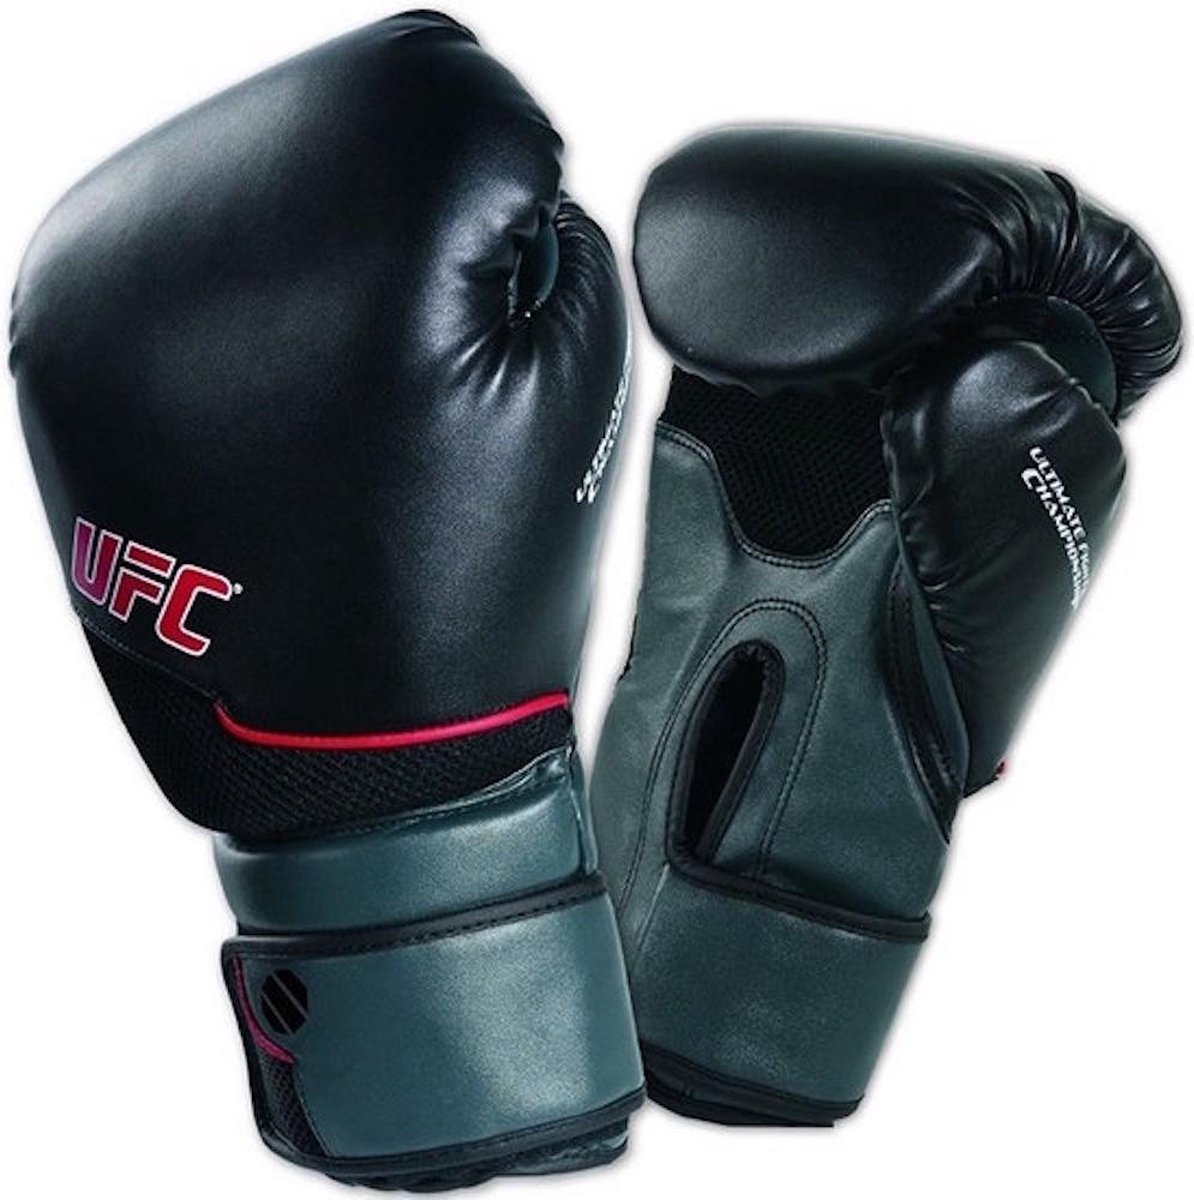 UFC Competition Bokshandschoenen Zwart 16 OZ